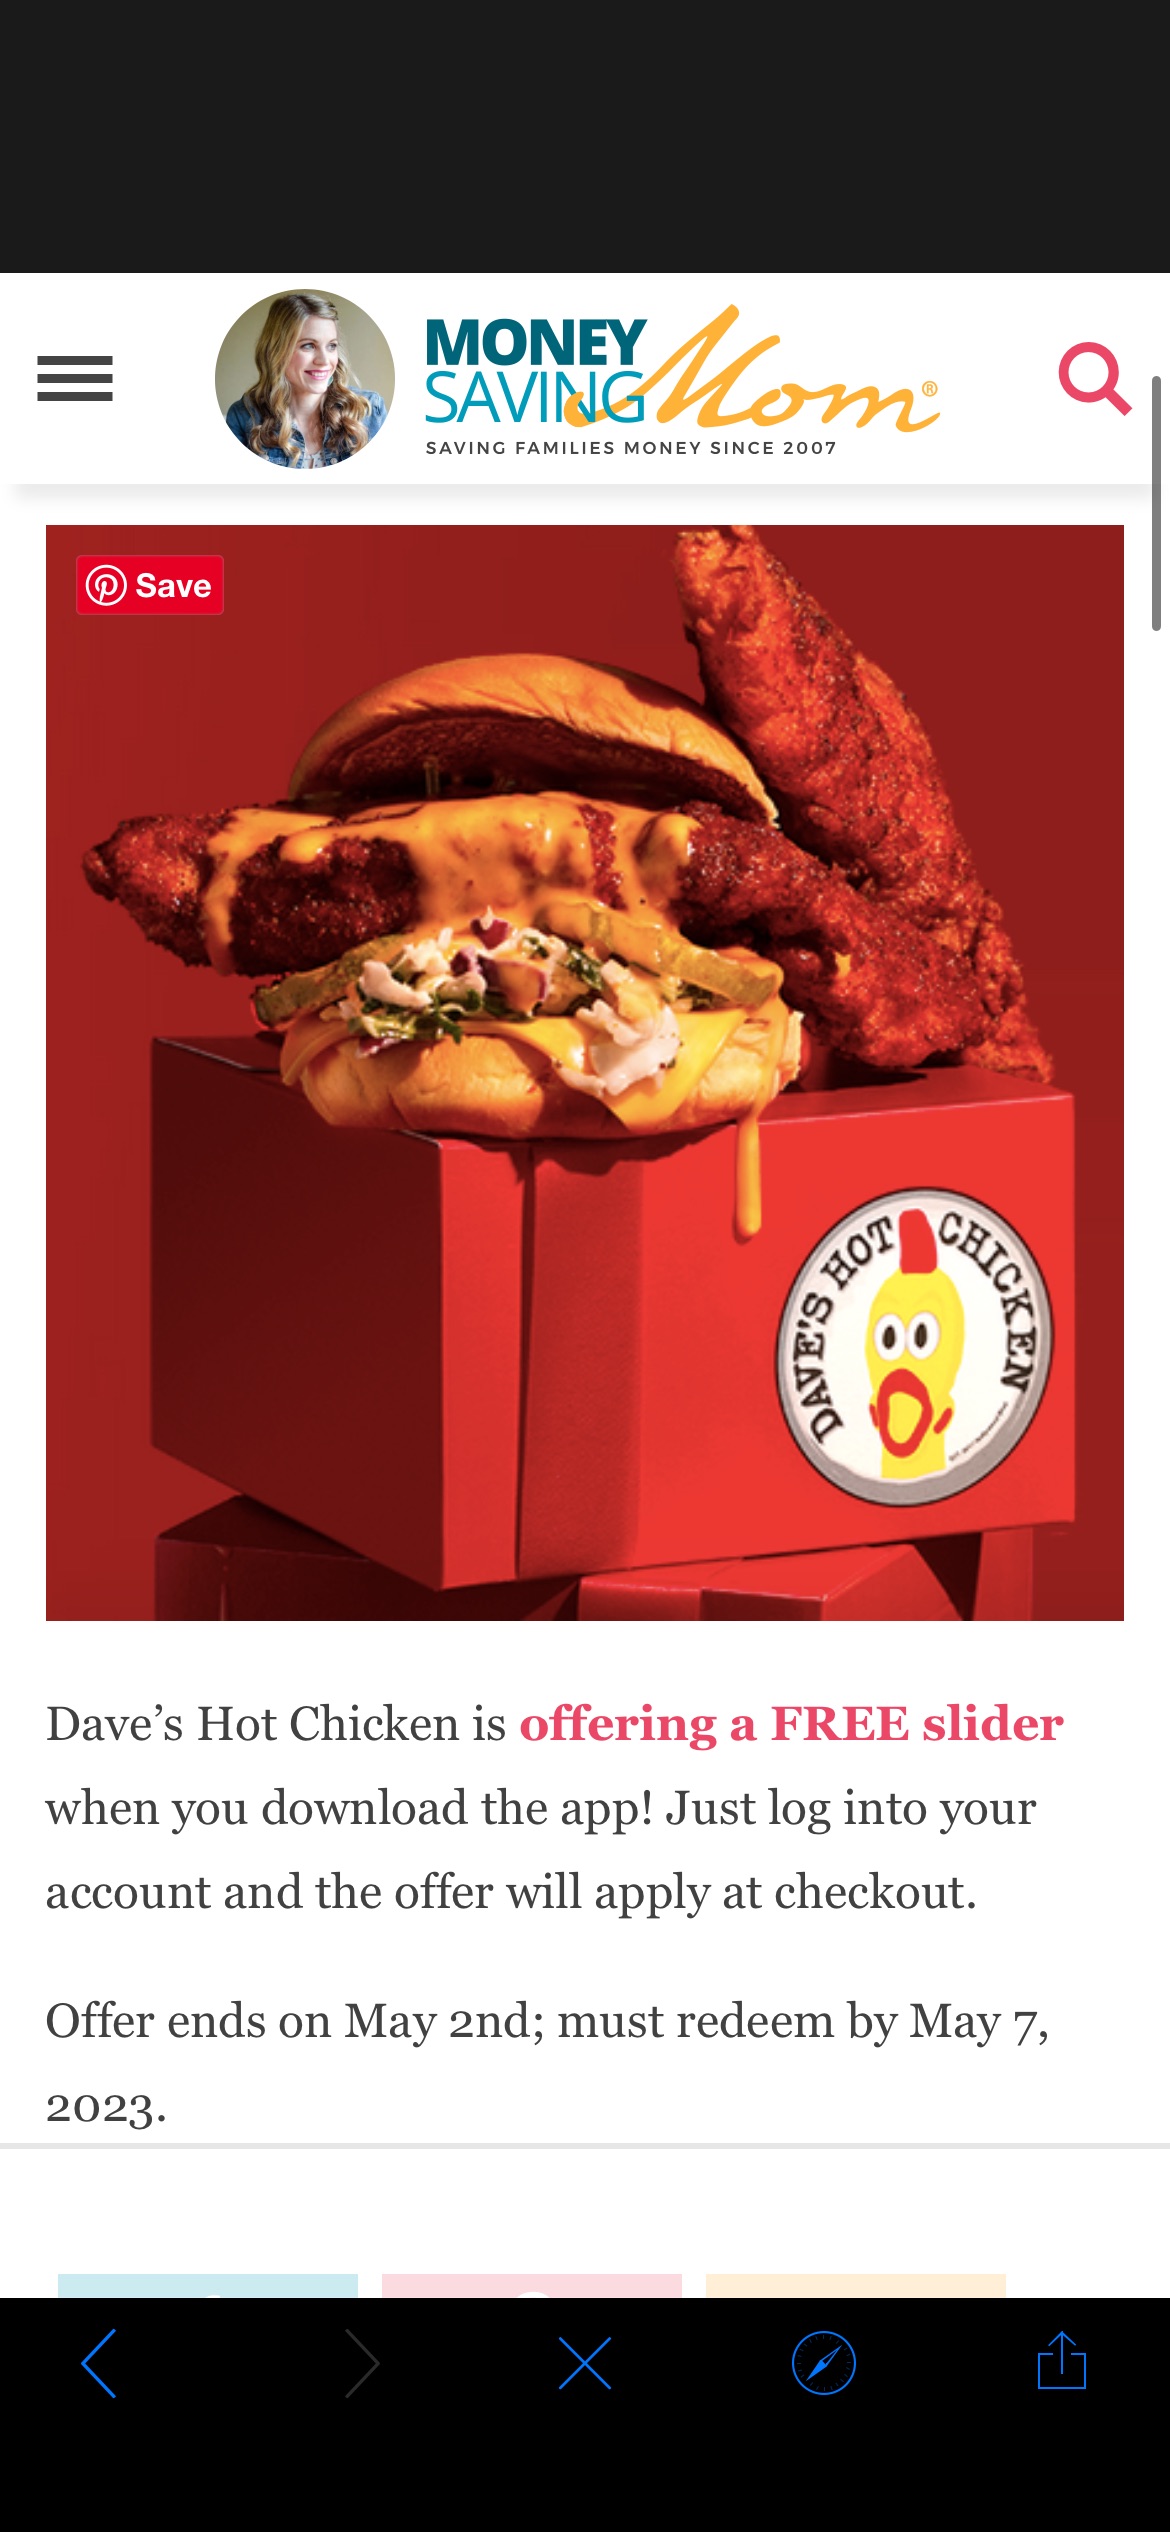 Dave’s hot chicken 下载app免费一个汉堡。下周二